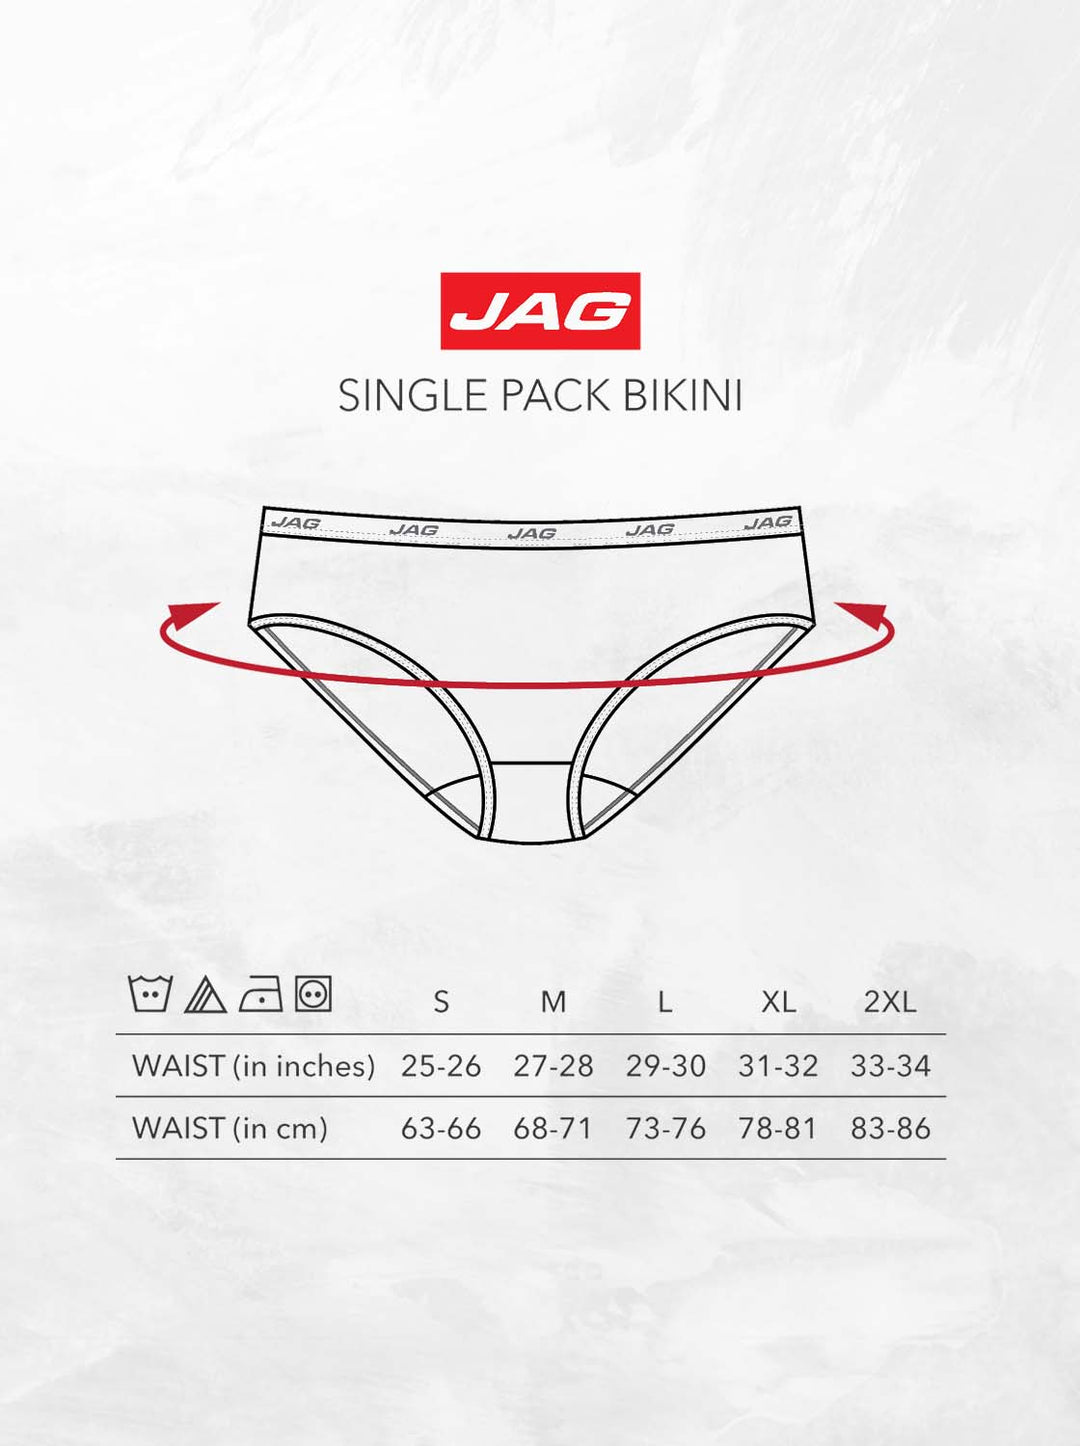 Jag Women's Underwear Cotton Stretch Bikini Single Pack